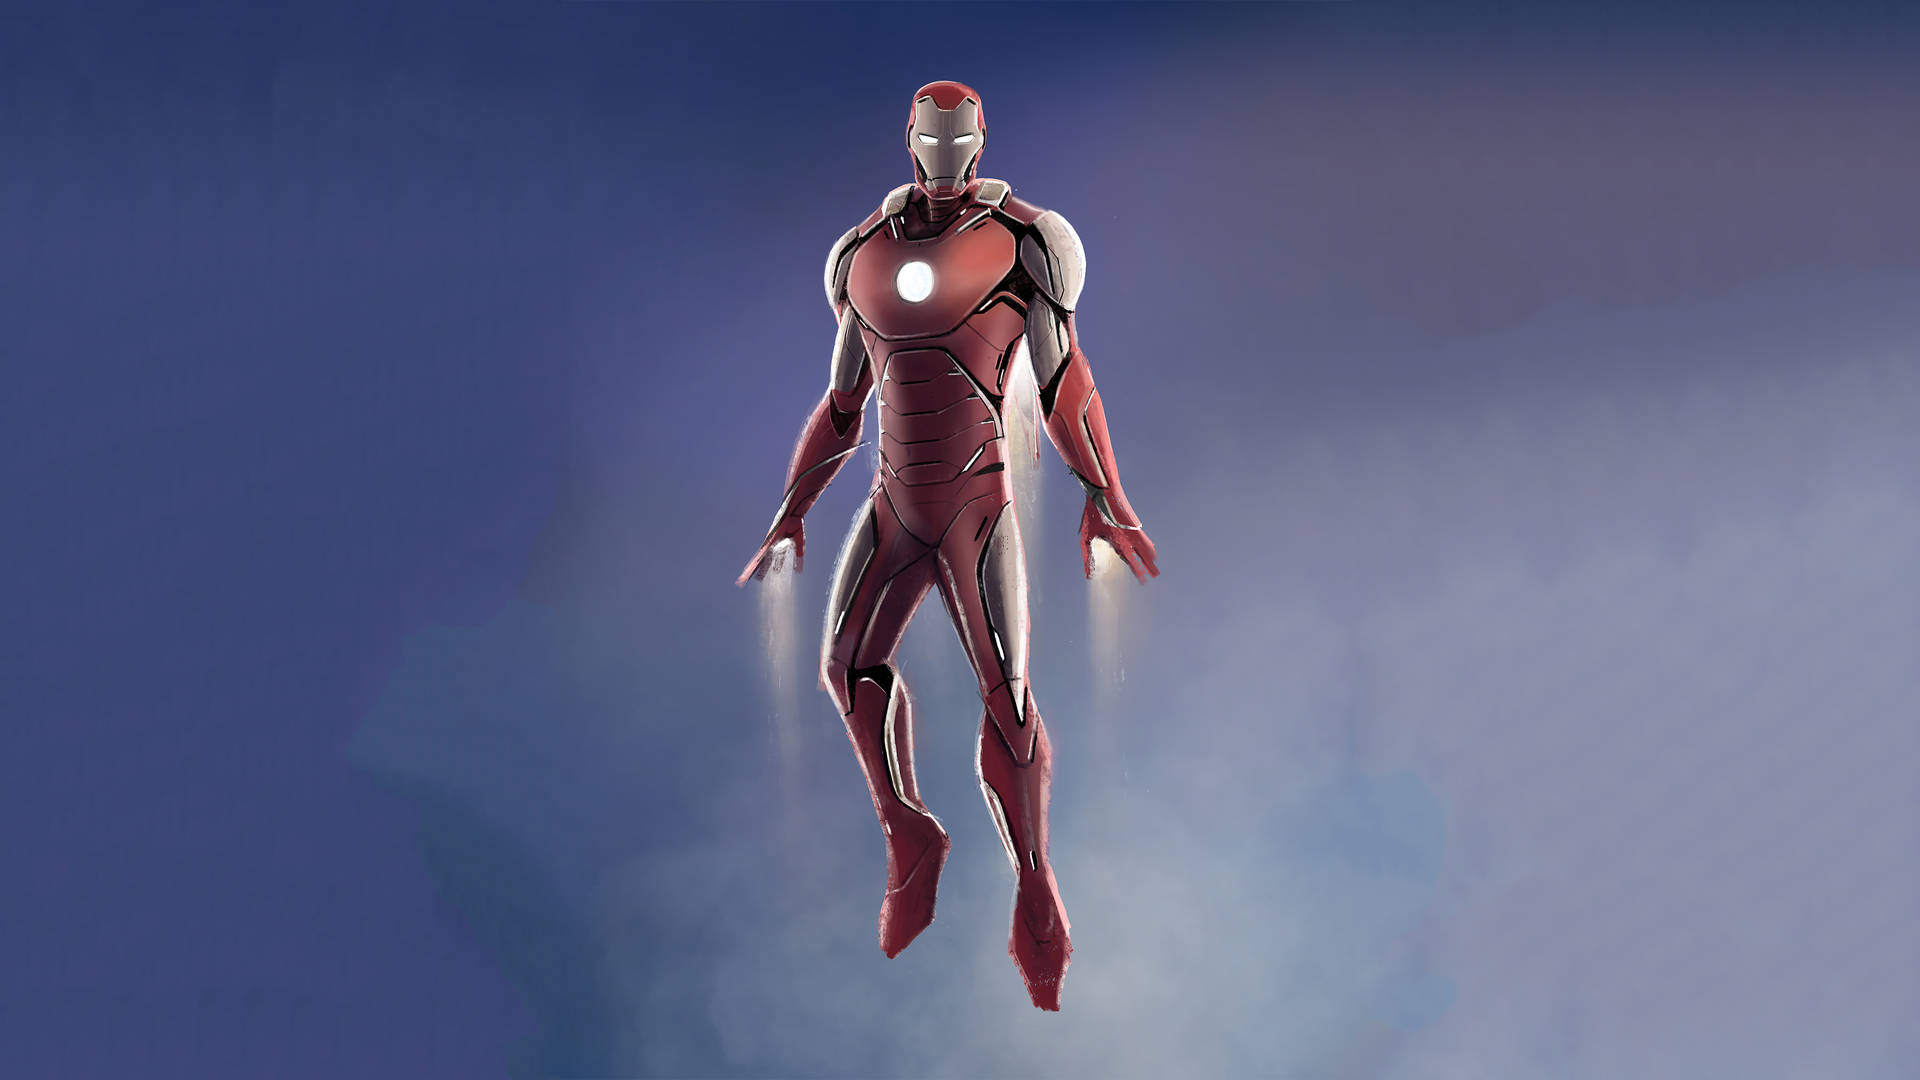 Flying Digital Art Of Superhero Iron Man Wallpaper